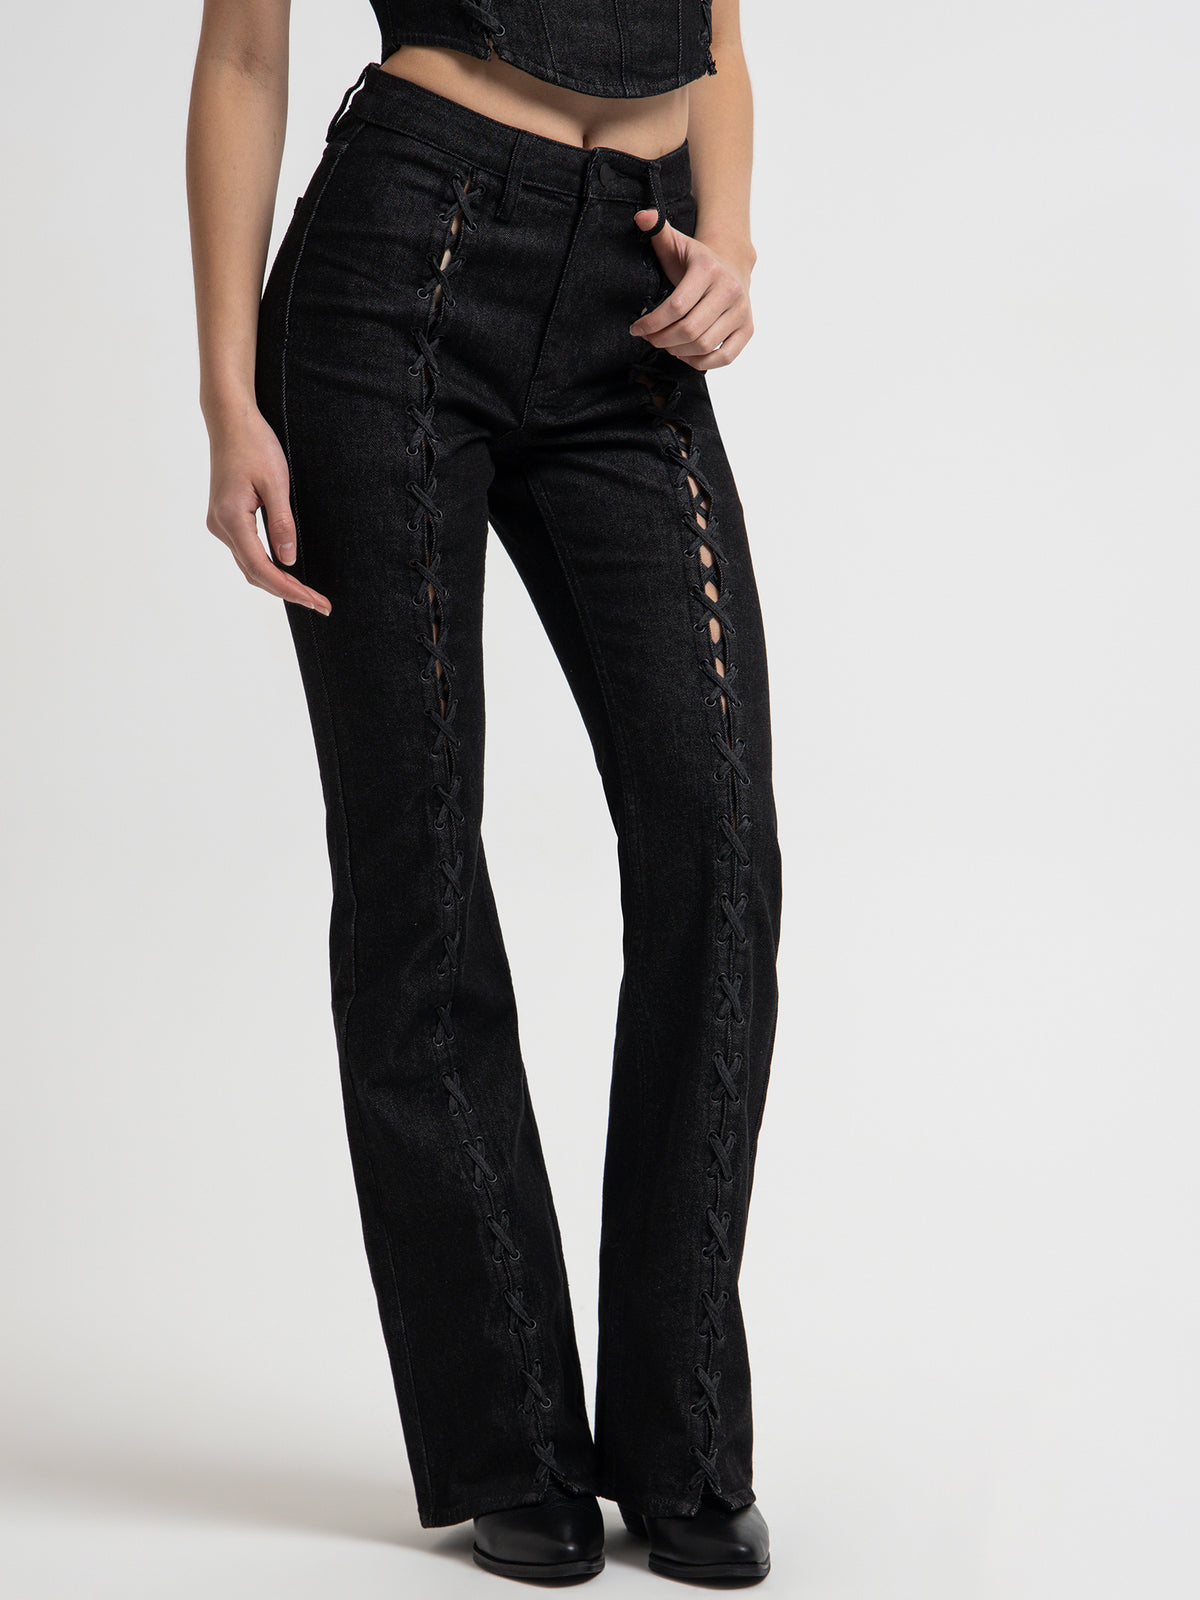 Soho Laced Denim Jeans in Ebony Black